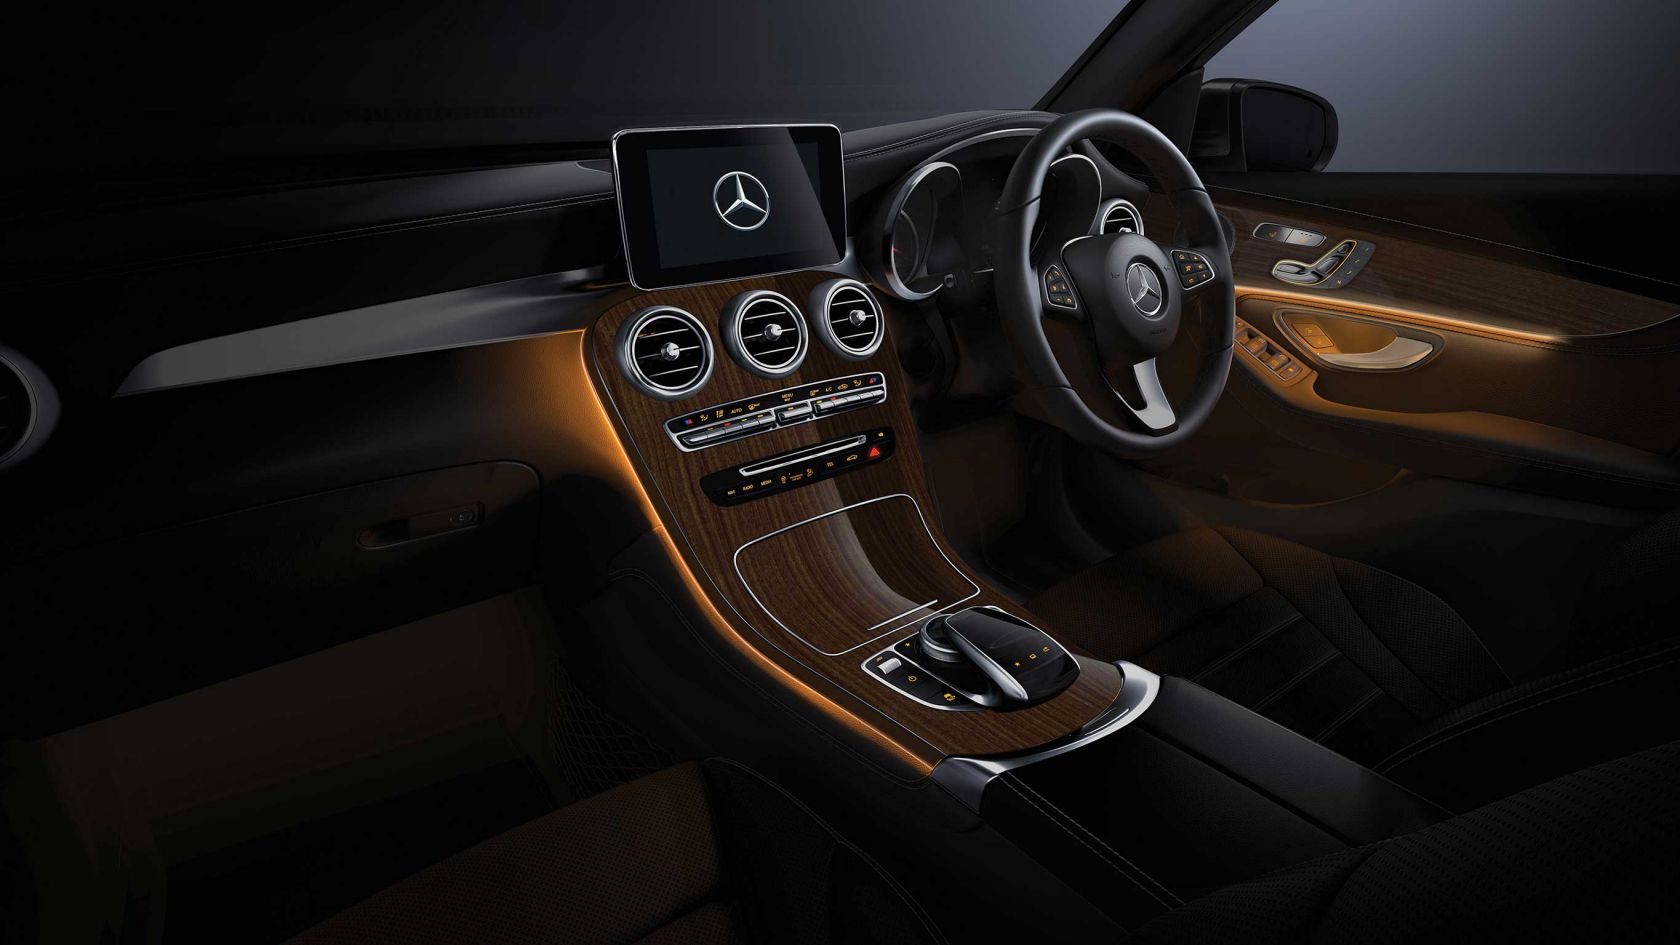 Mercedes Benz Glc 43 Amg 2017 Std Interior Car Photos Overdrive